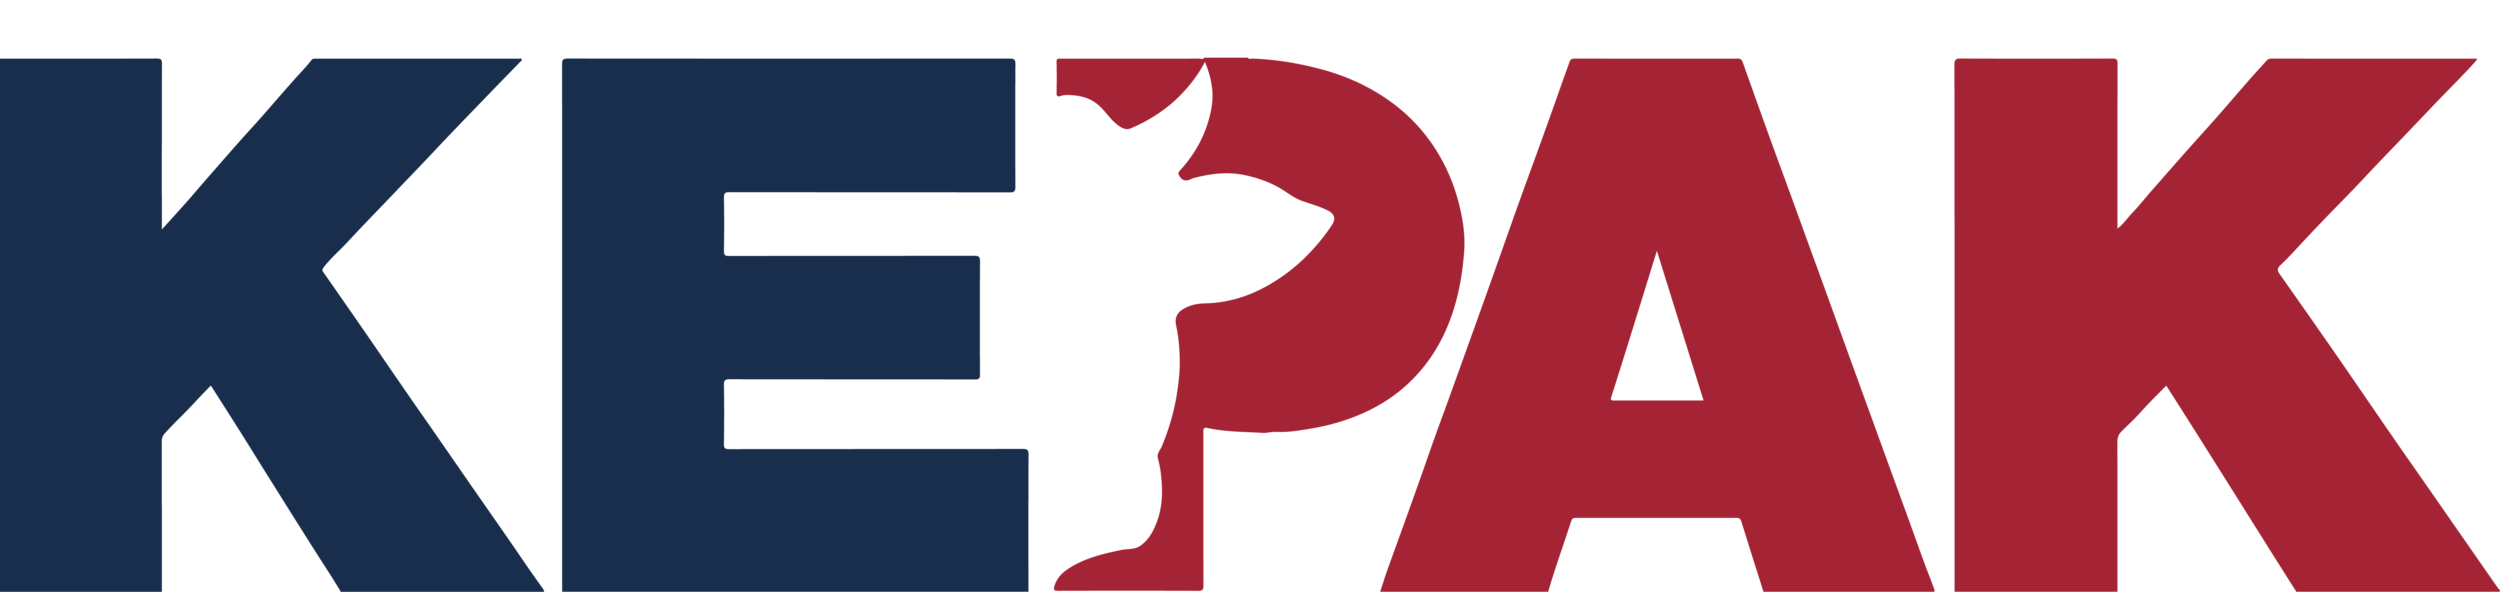 Split Logo Kepak.png